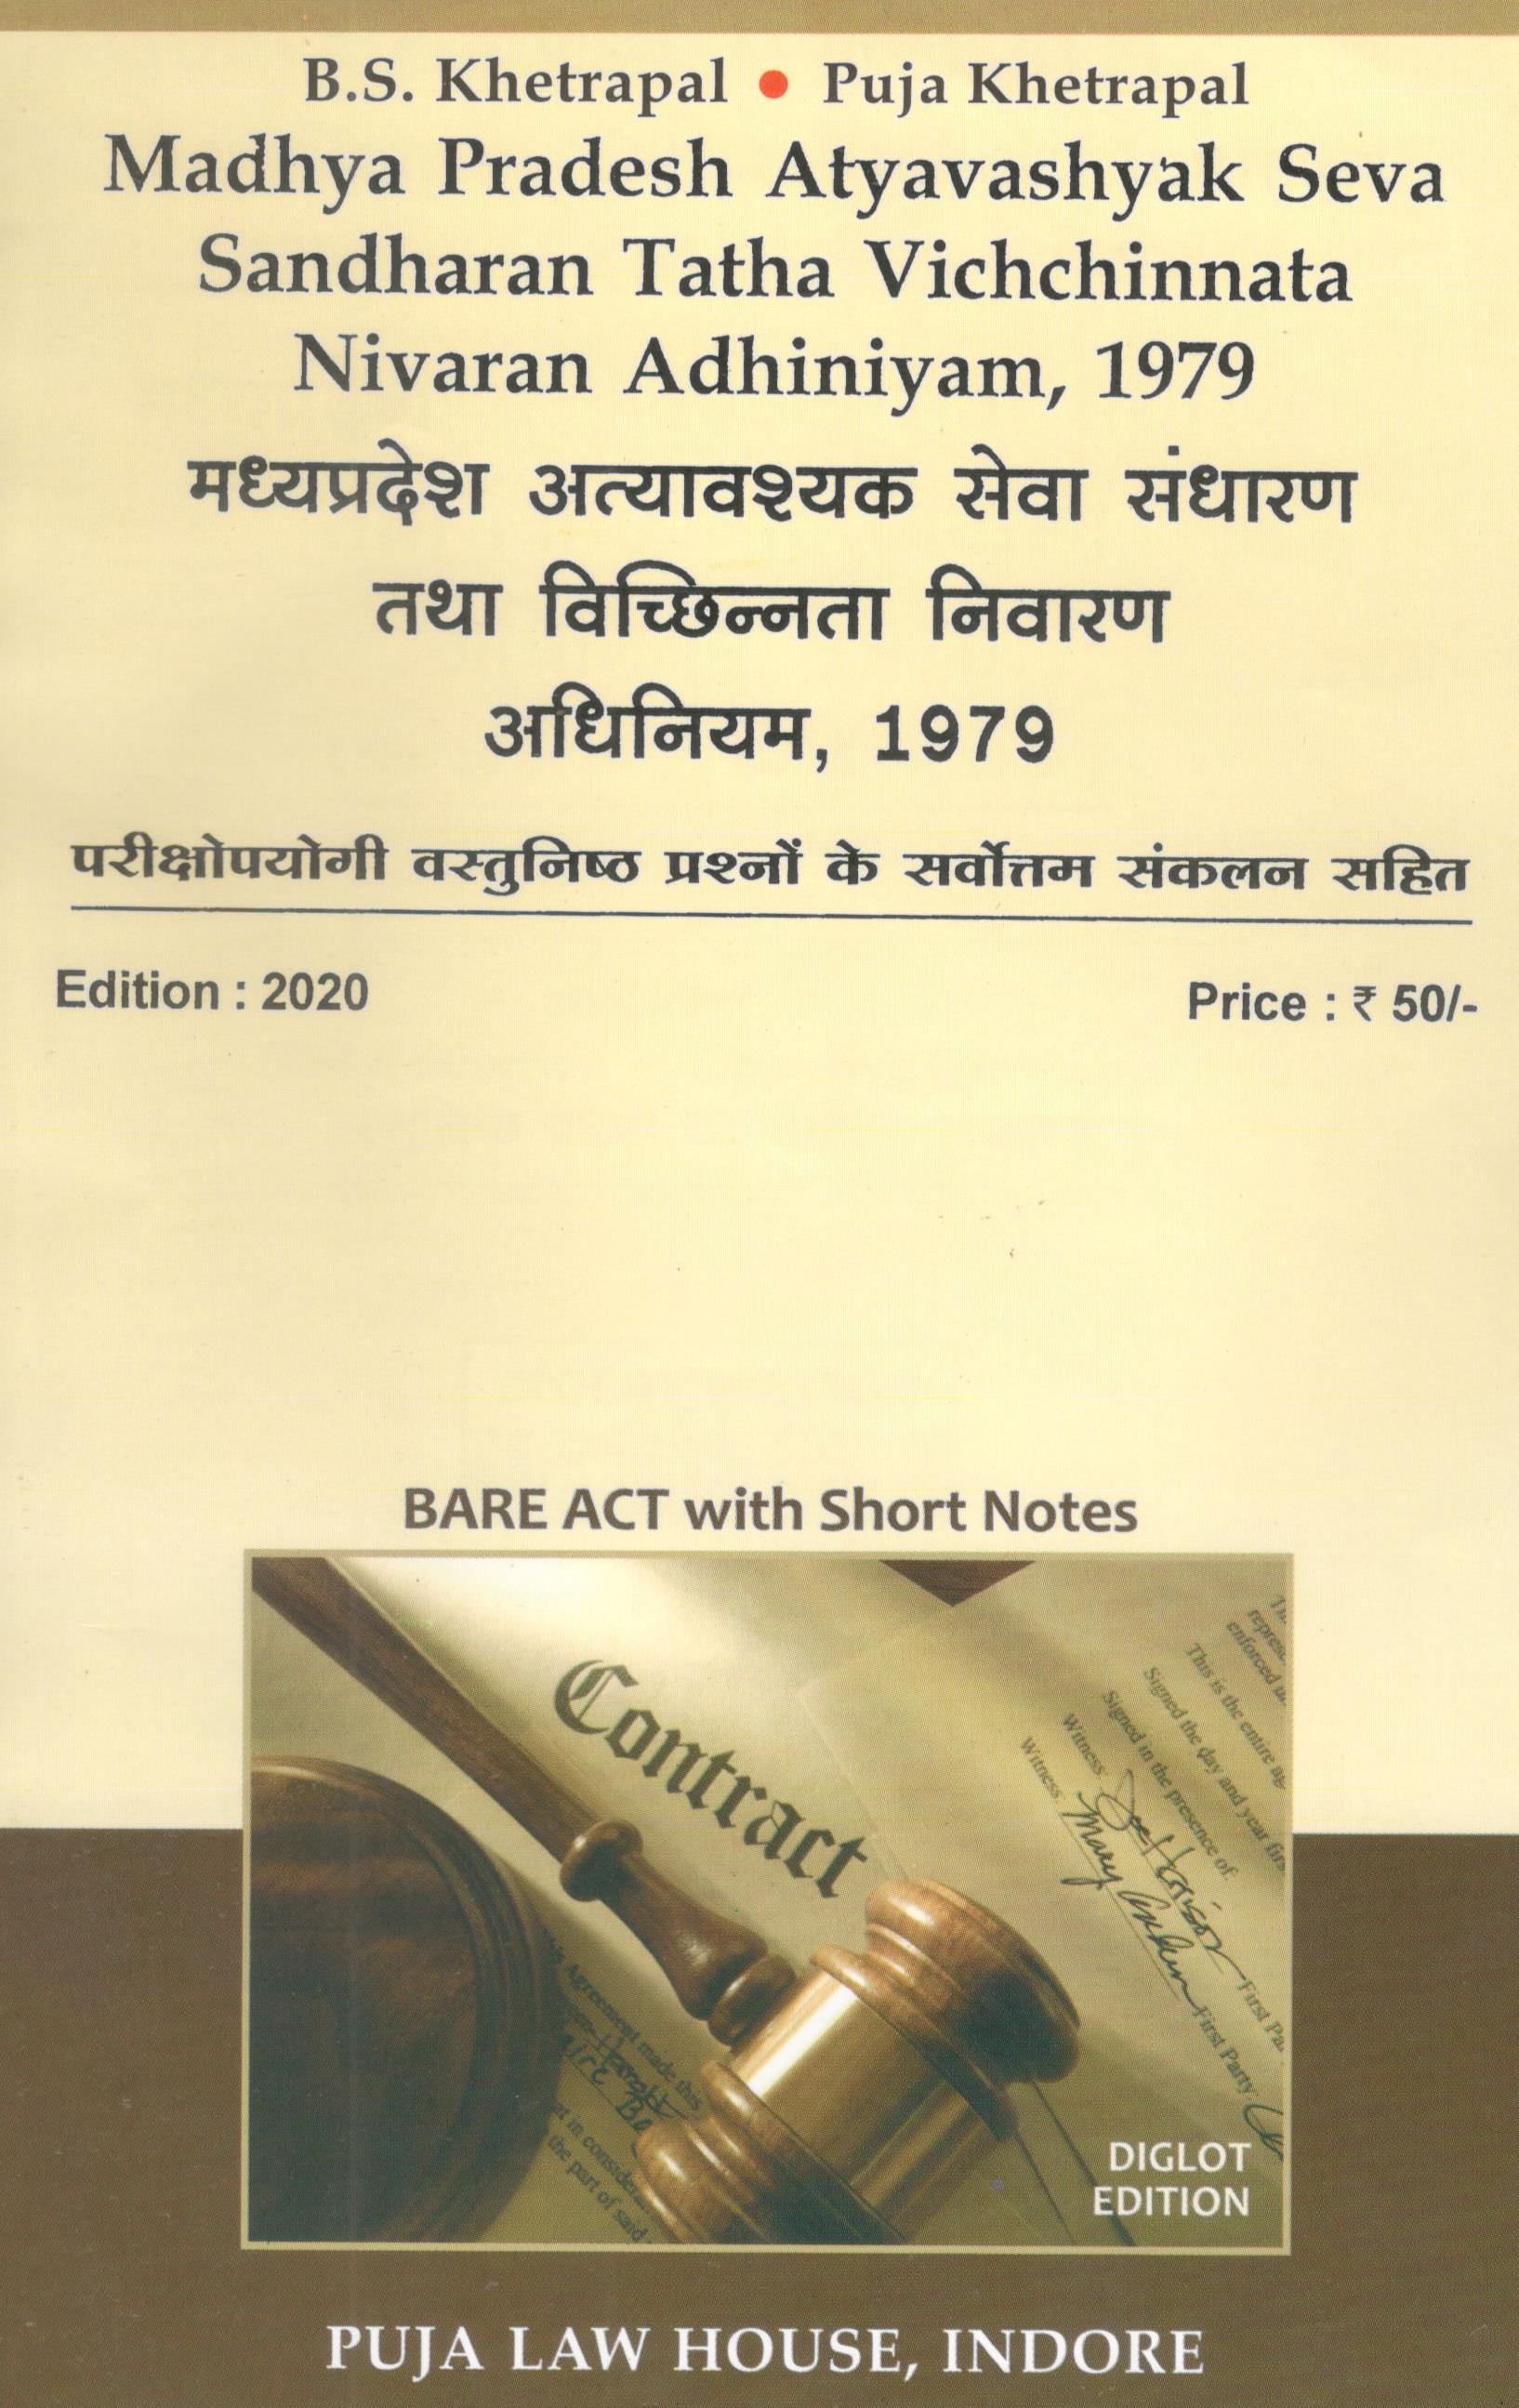 मध्यप्रदेश अत्यावश्यक सेवा संधारण तथा विच्छिन्नता  निवारण अधिनियम, 1979 / Madhya Pradesh Atyavashyak Seva Sandharan Tatha Vichchinnata Nivaran Adhiniyam, 1979